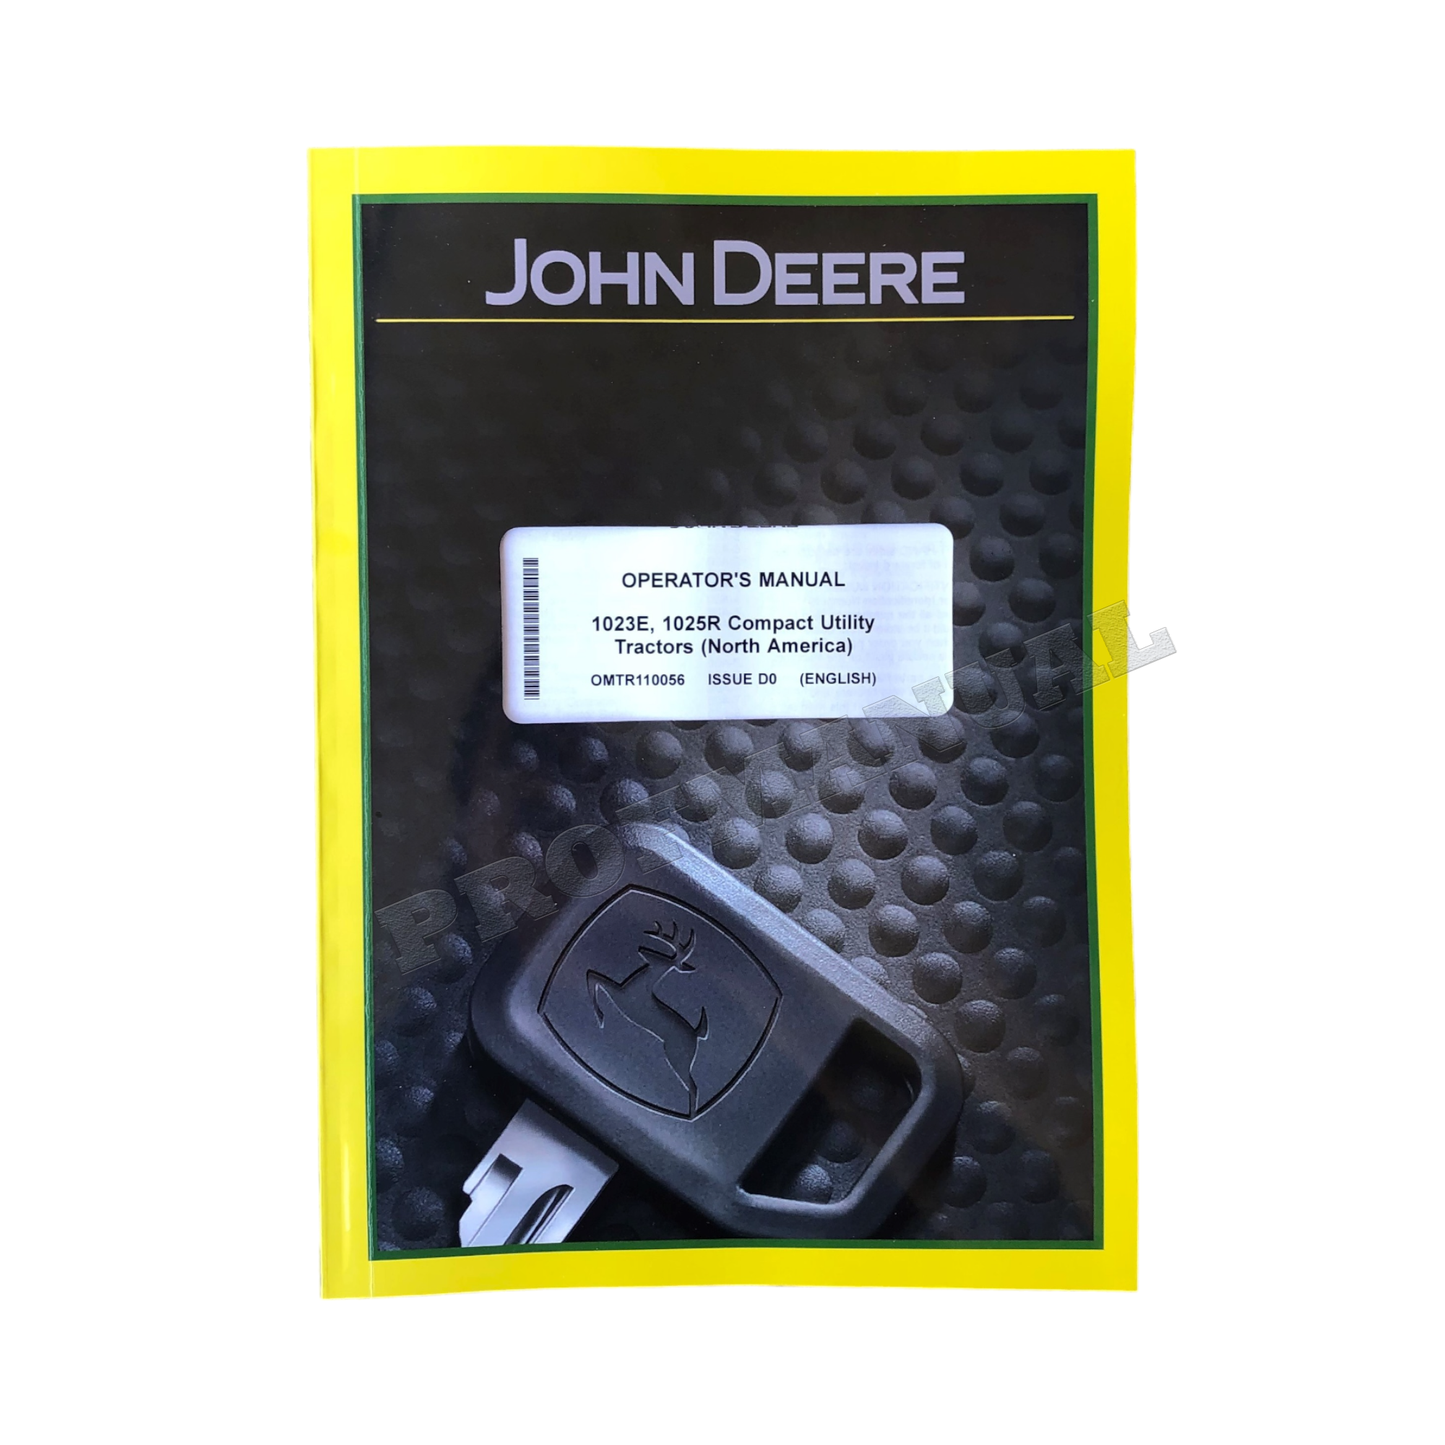 JOHN DEERE 1025R  1023E TRACTOR OPERATORS MANUAL